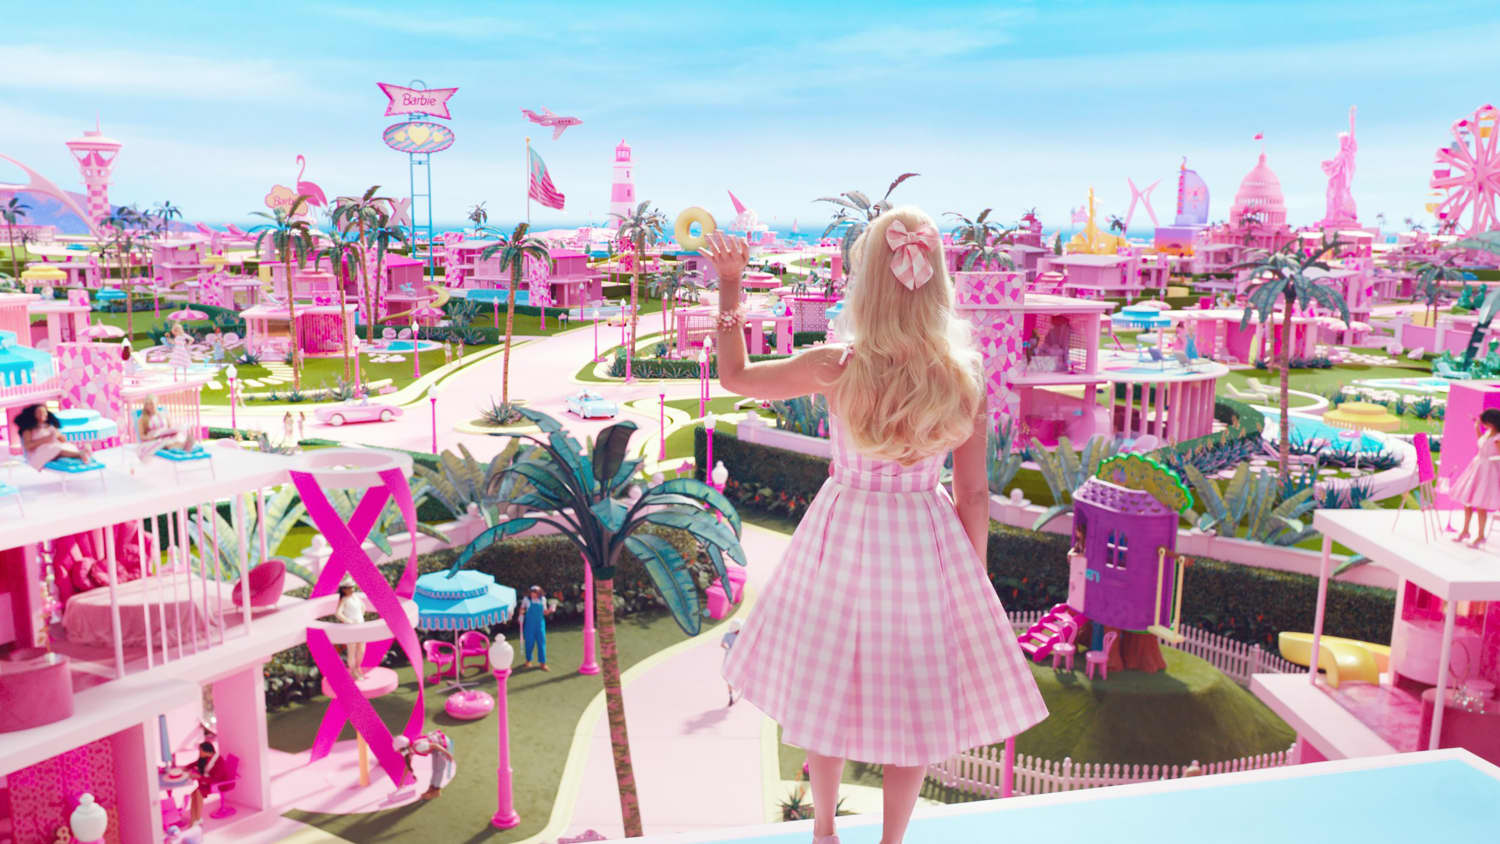 casa da Barbie  Barbie Girl Collectible